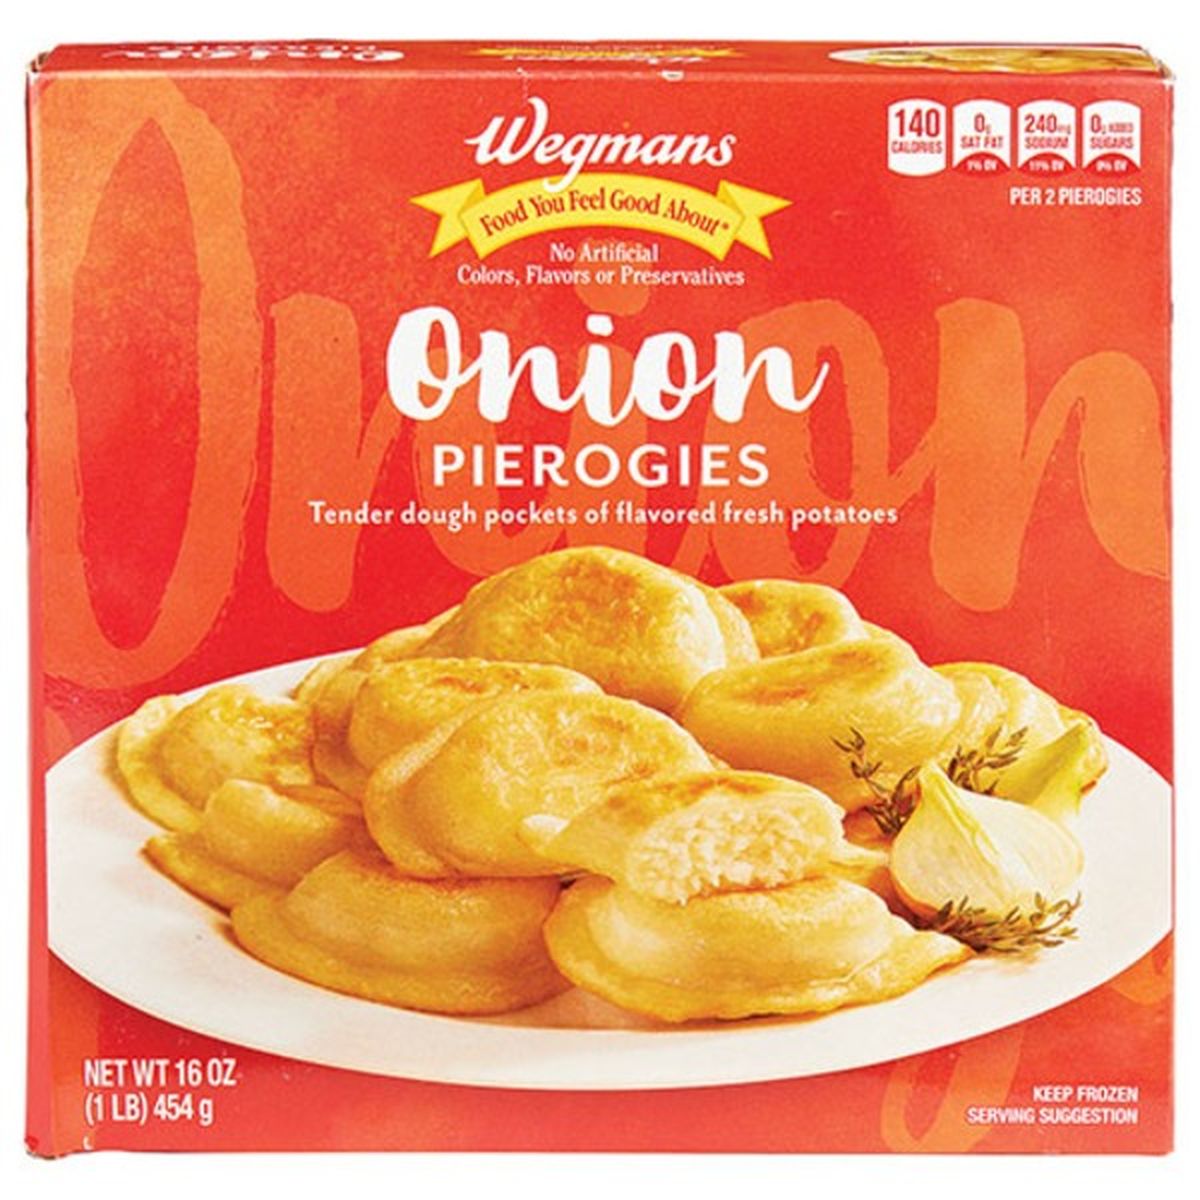 Calories in Wegmans Onion Pierogies